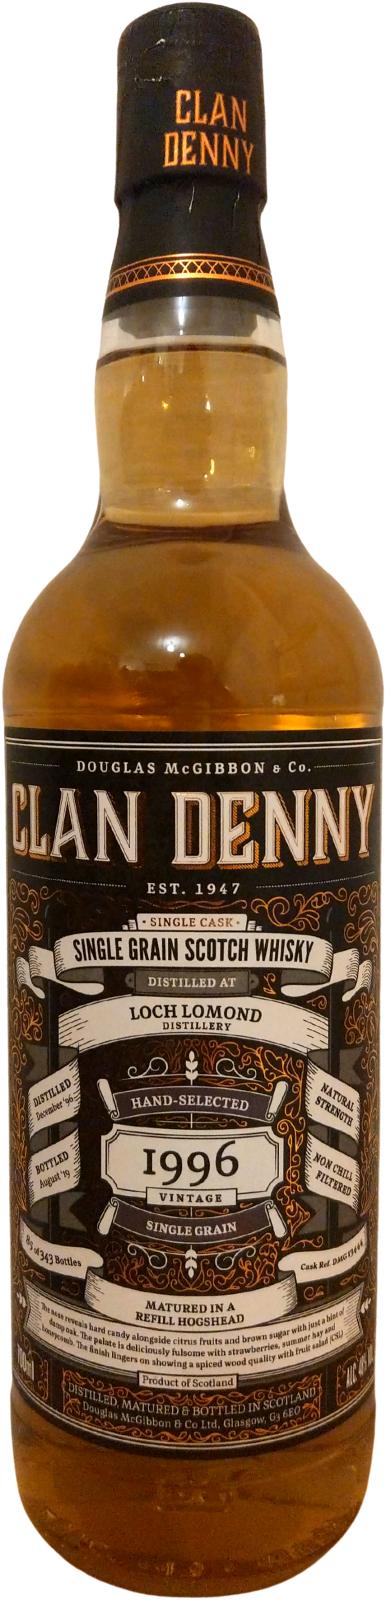 Loch Lomond 1996 (Douglas McGibbon) Clan Denny (Cask #DMG 13444) 22 Year Old 2019 Release Single Grain Scotch Whisky | 700ML